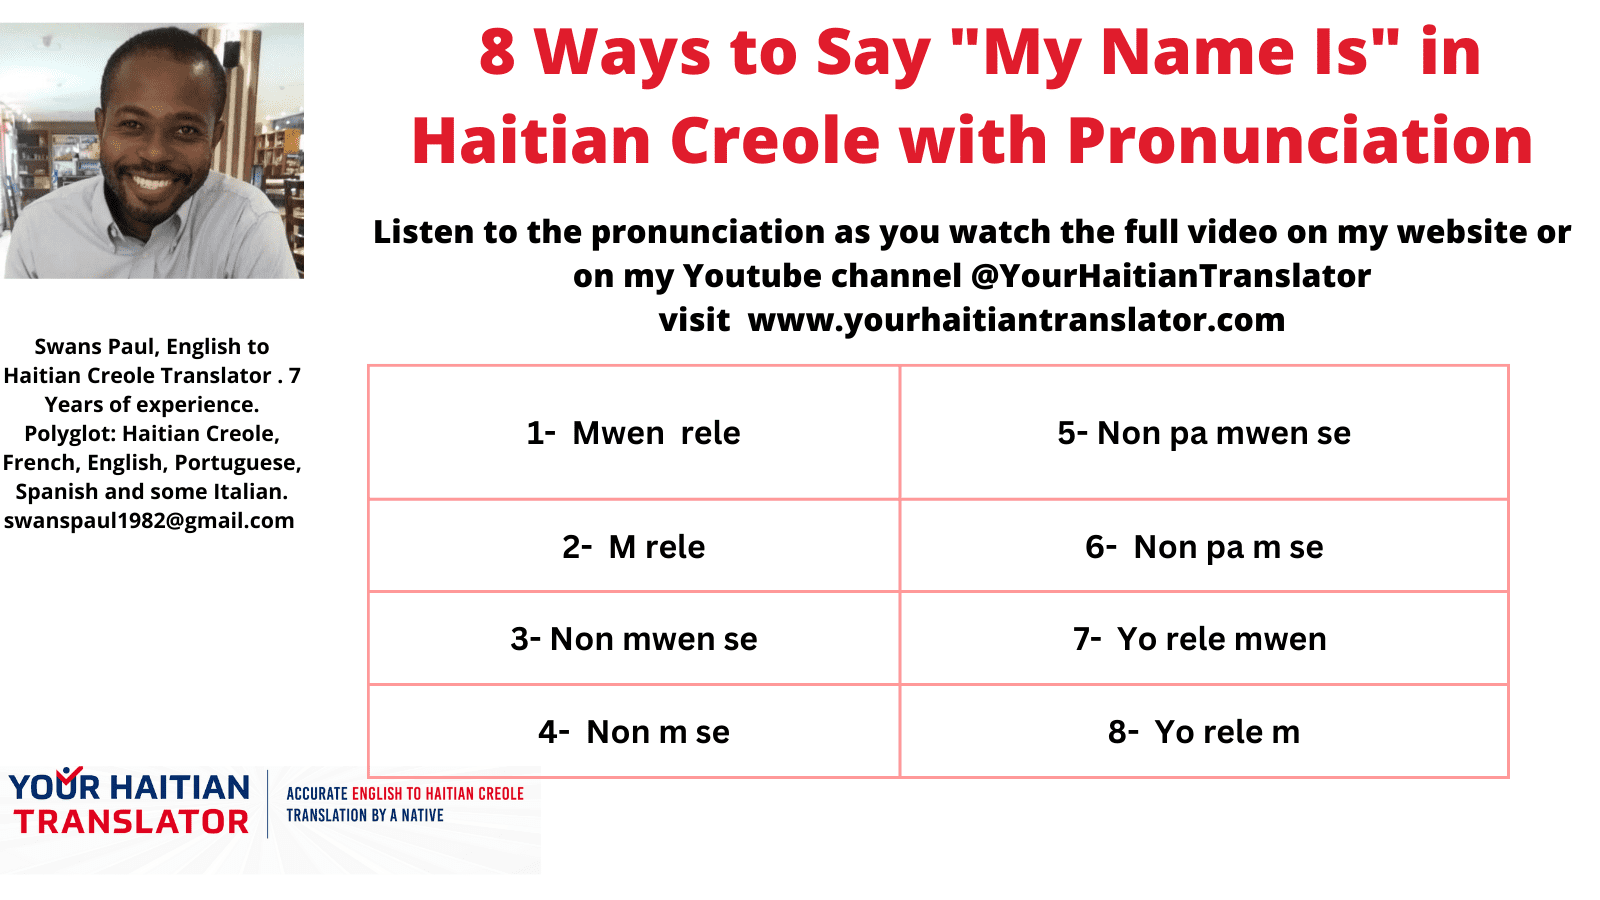 Haitian Creole Translator shows 8 ways to say "My Name Is" in Haitian Creole